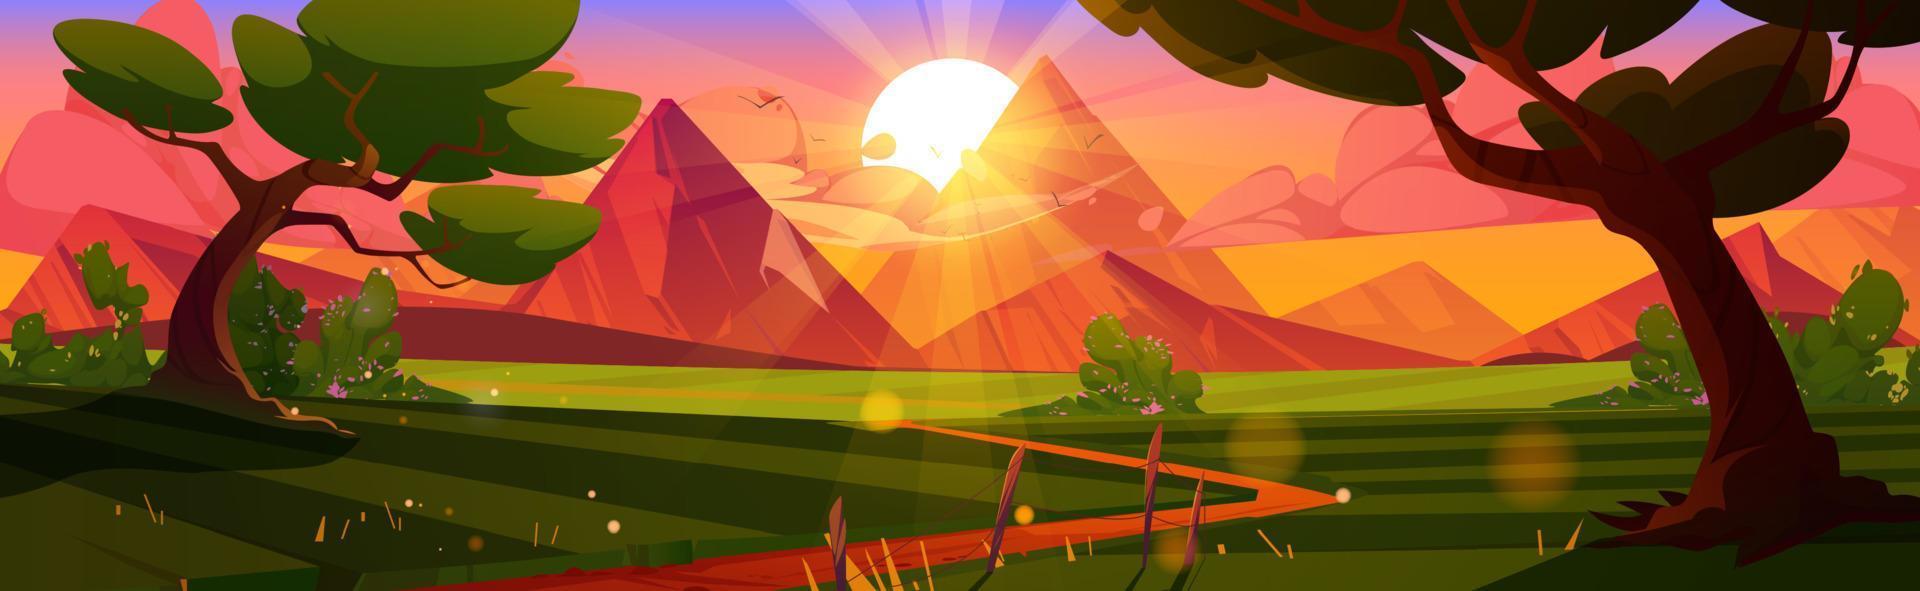 Cartoon Natur Landschaft Sonnenuntergang Hintergrund vektor